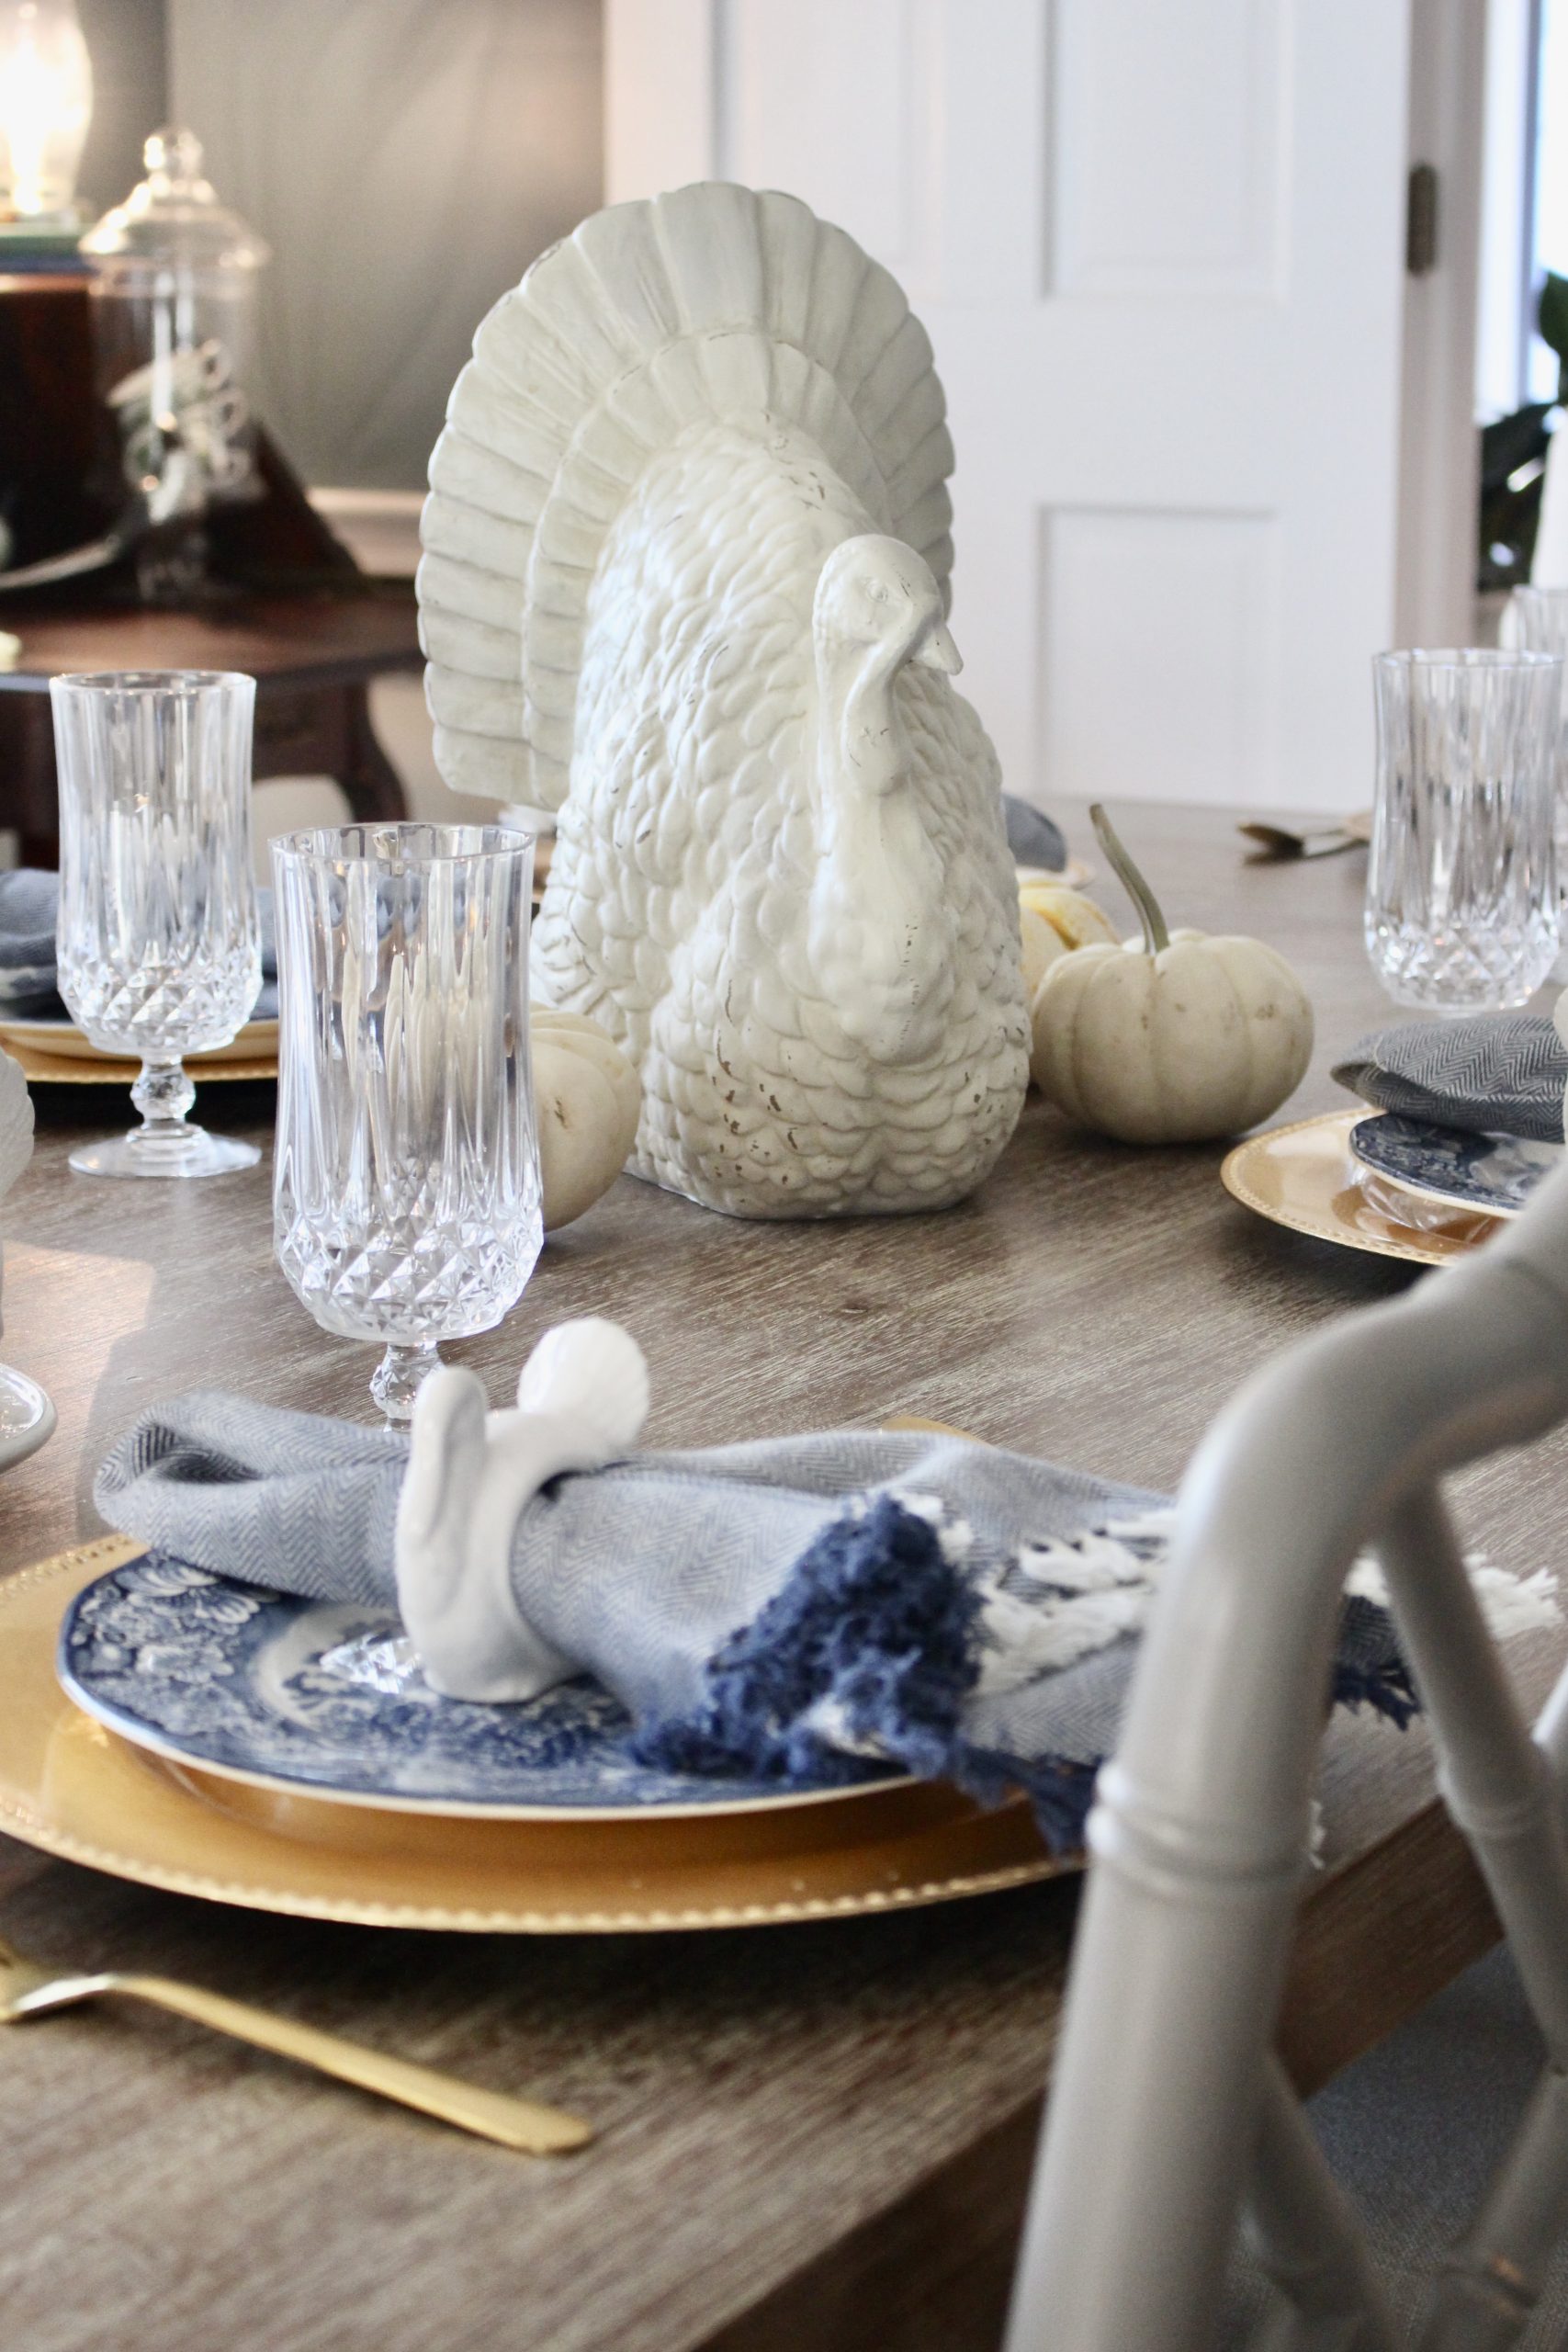 Thanksgiving table in Blue & White~ White Cottage Home & Living~ #thanksgiving #thanksgivingtabledecor #blueandwhitetablesetting #blueandwhite #libertybluedinnerplates #thanksgivingtablesetting